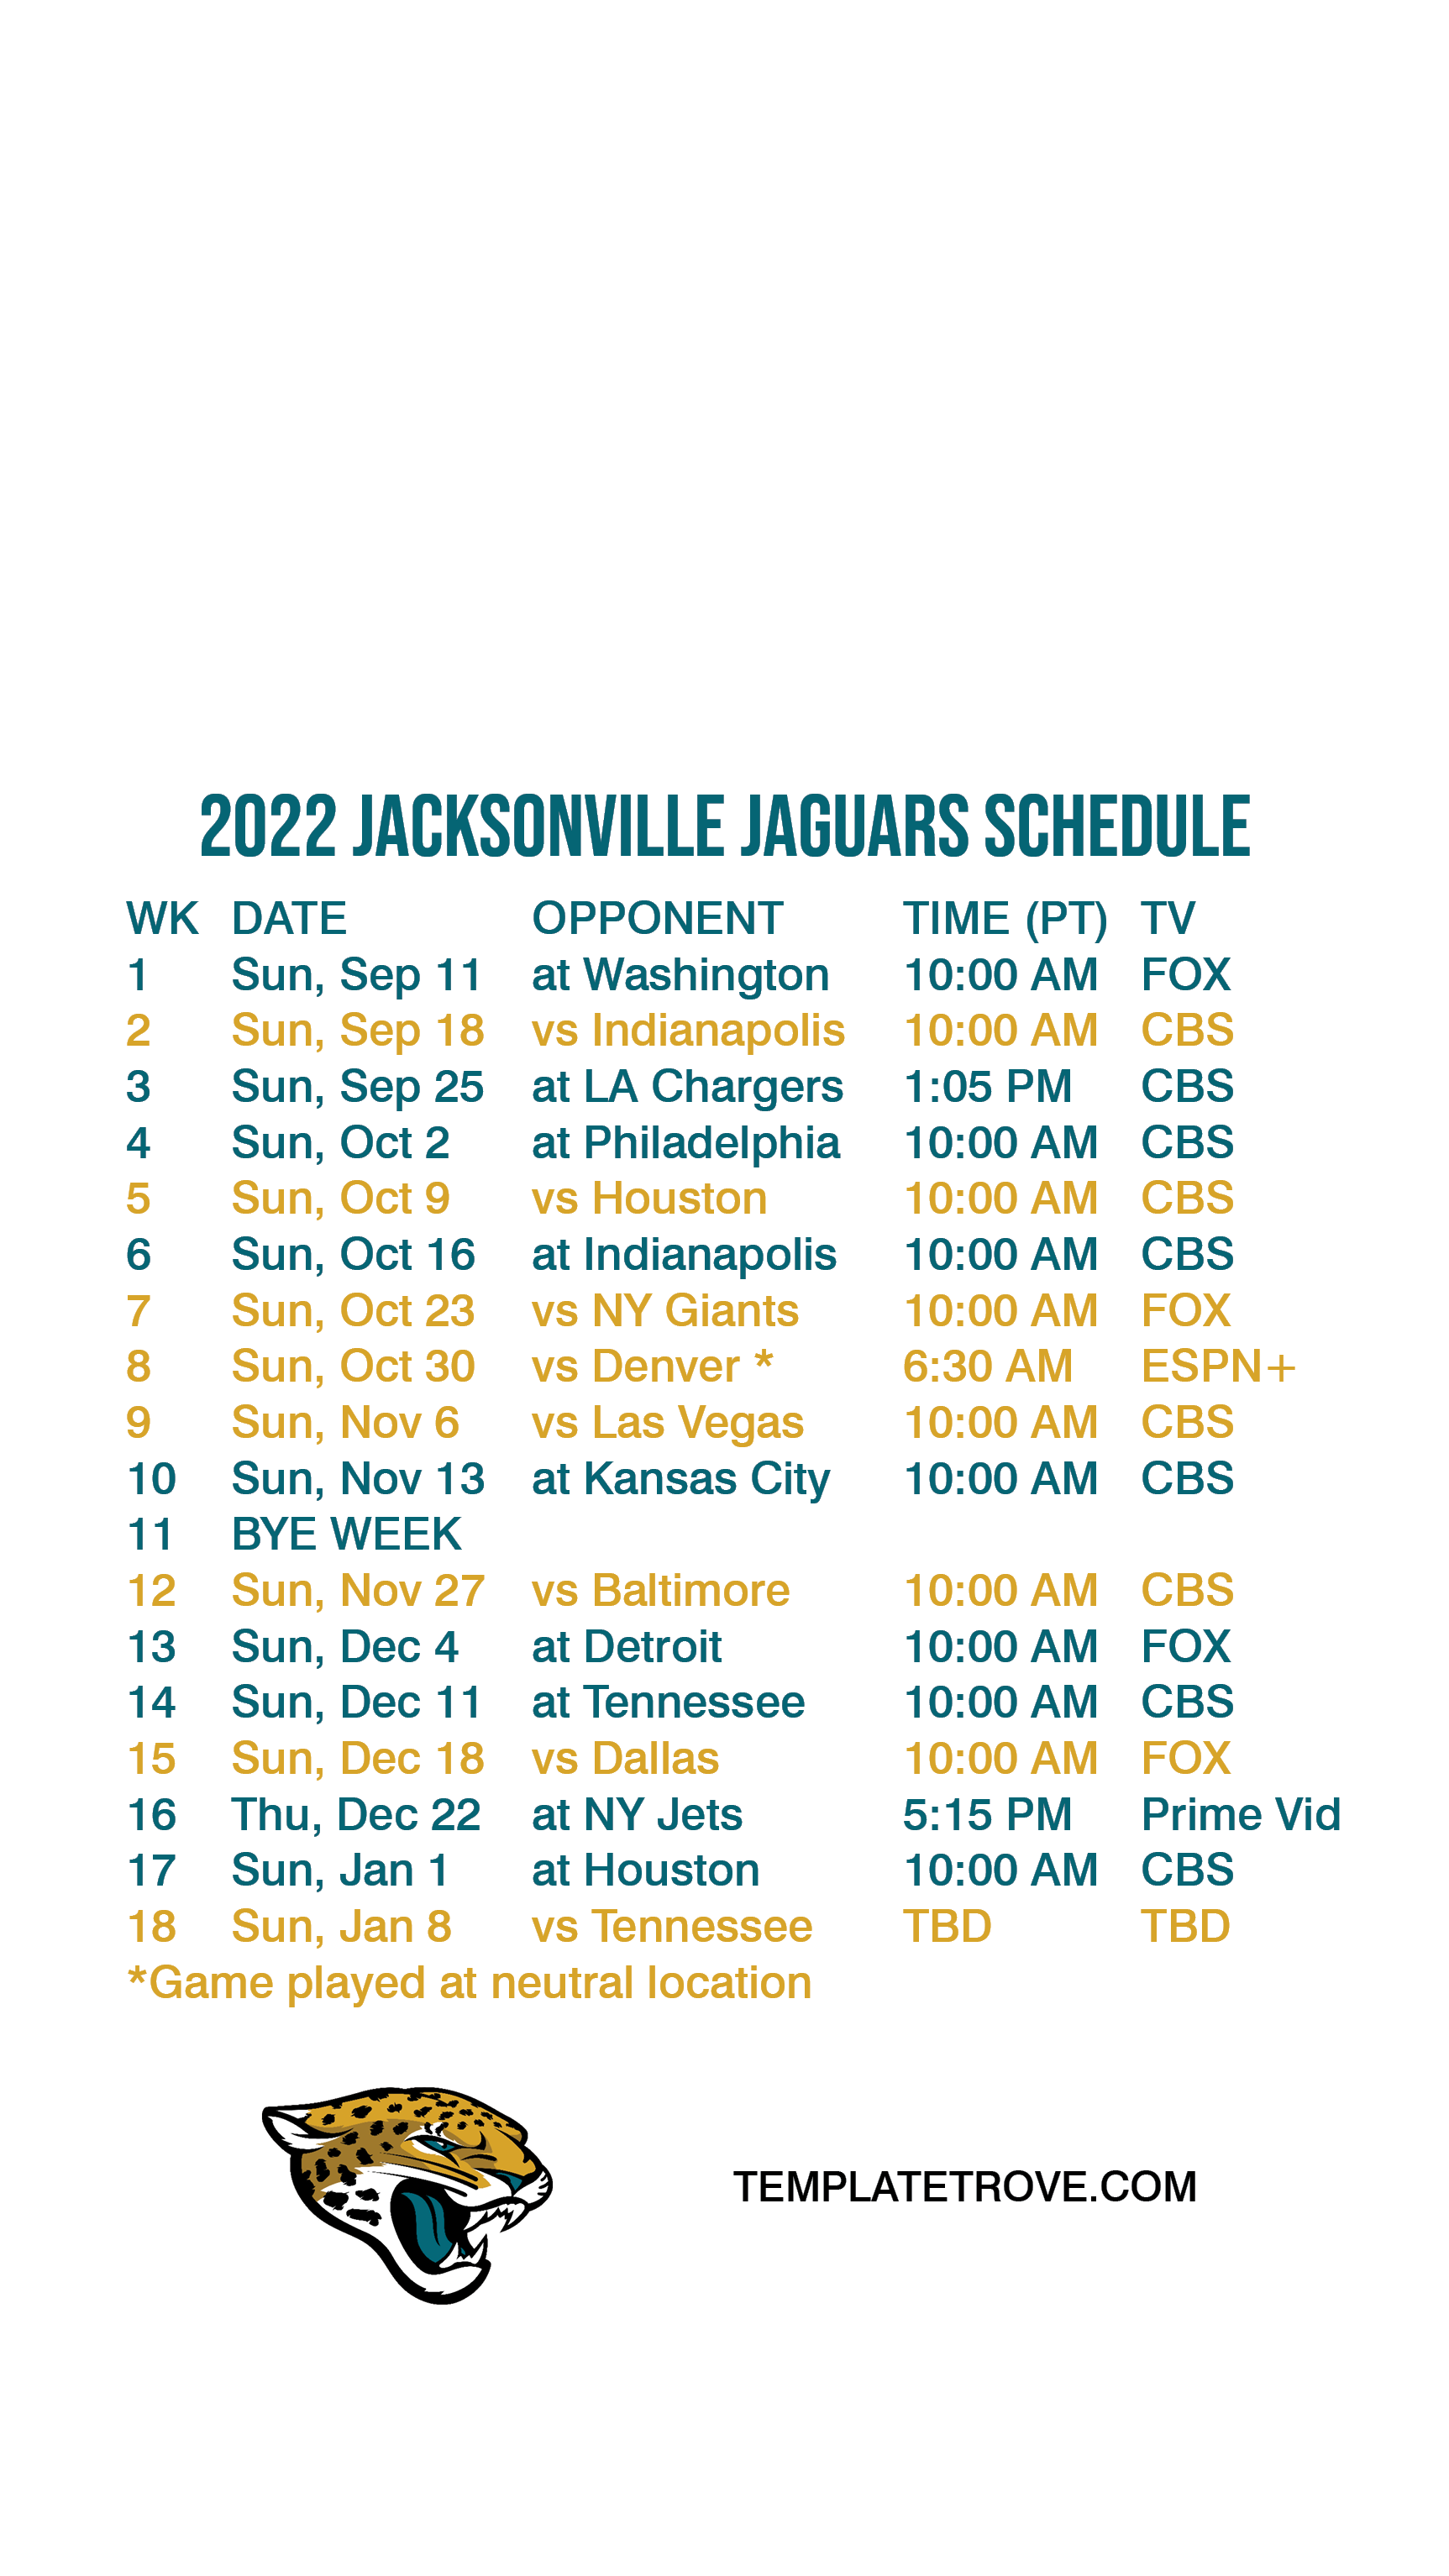 2022-2023 Jacksonville Jaguars Lock Screen Schedule for iPhone 6-7-8 Plus